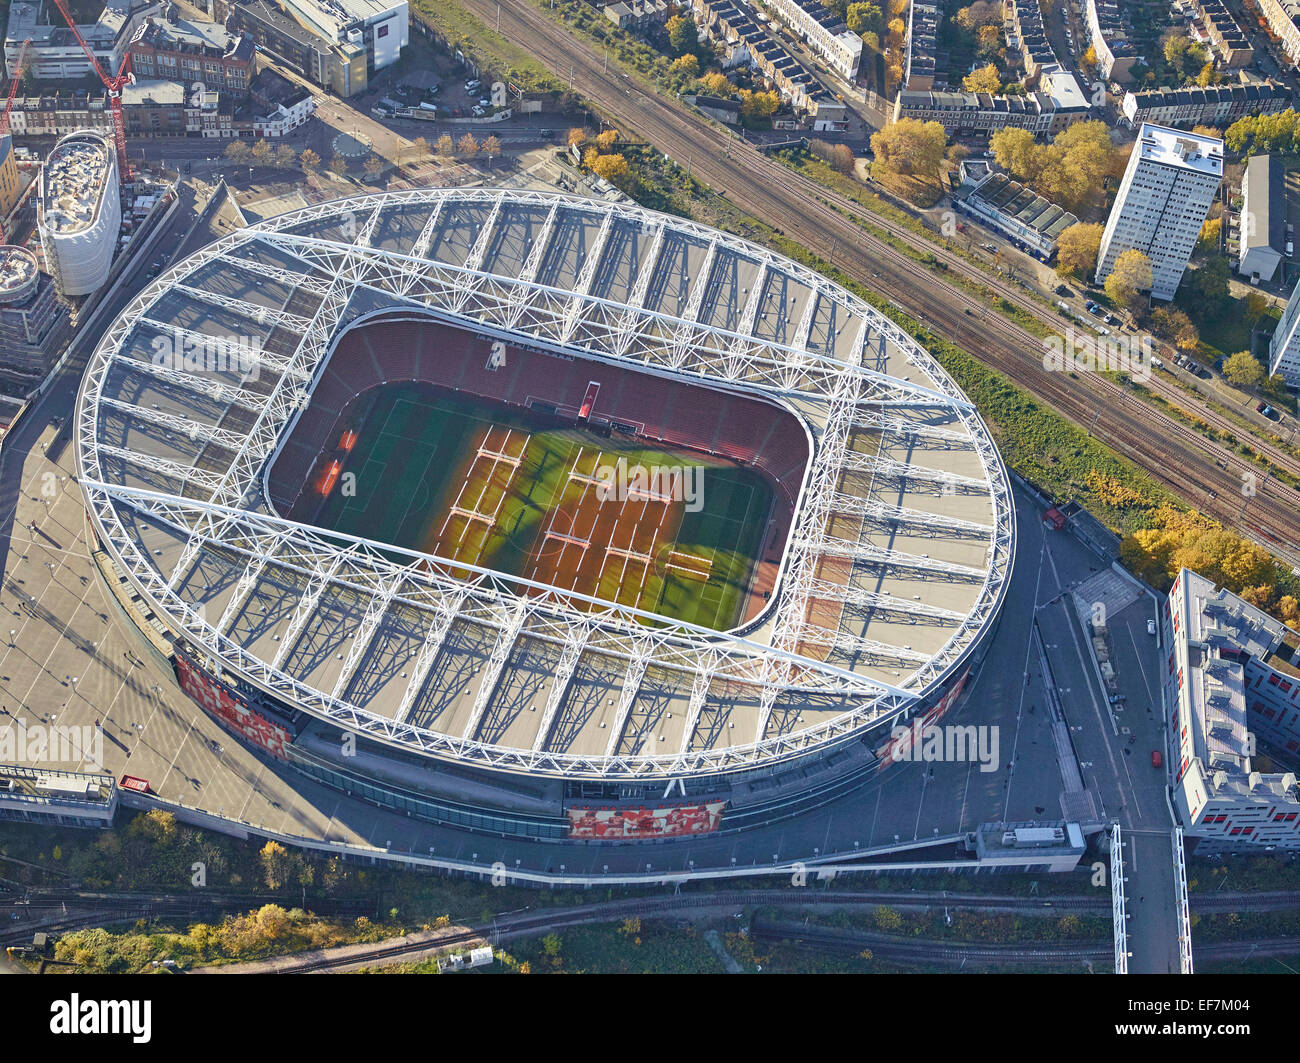 Emitrates Stadium London, the home of Arsenal FC, London Stock Photo